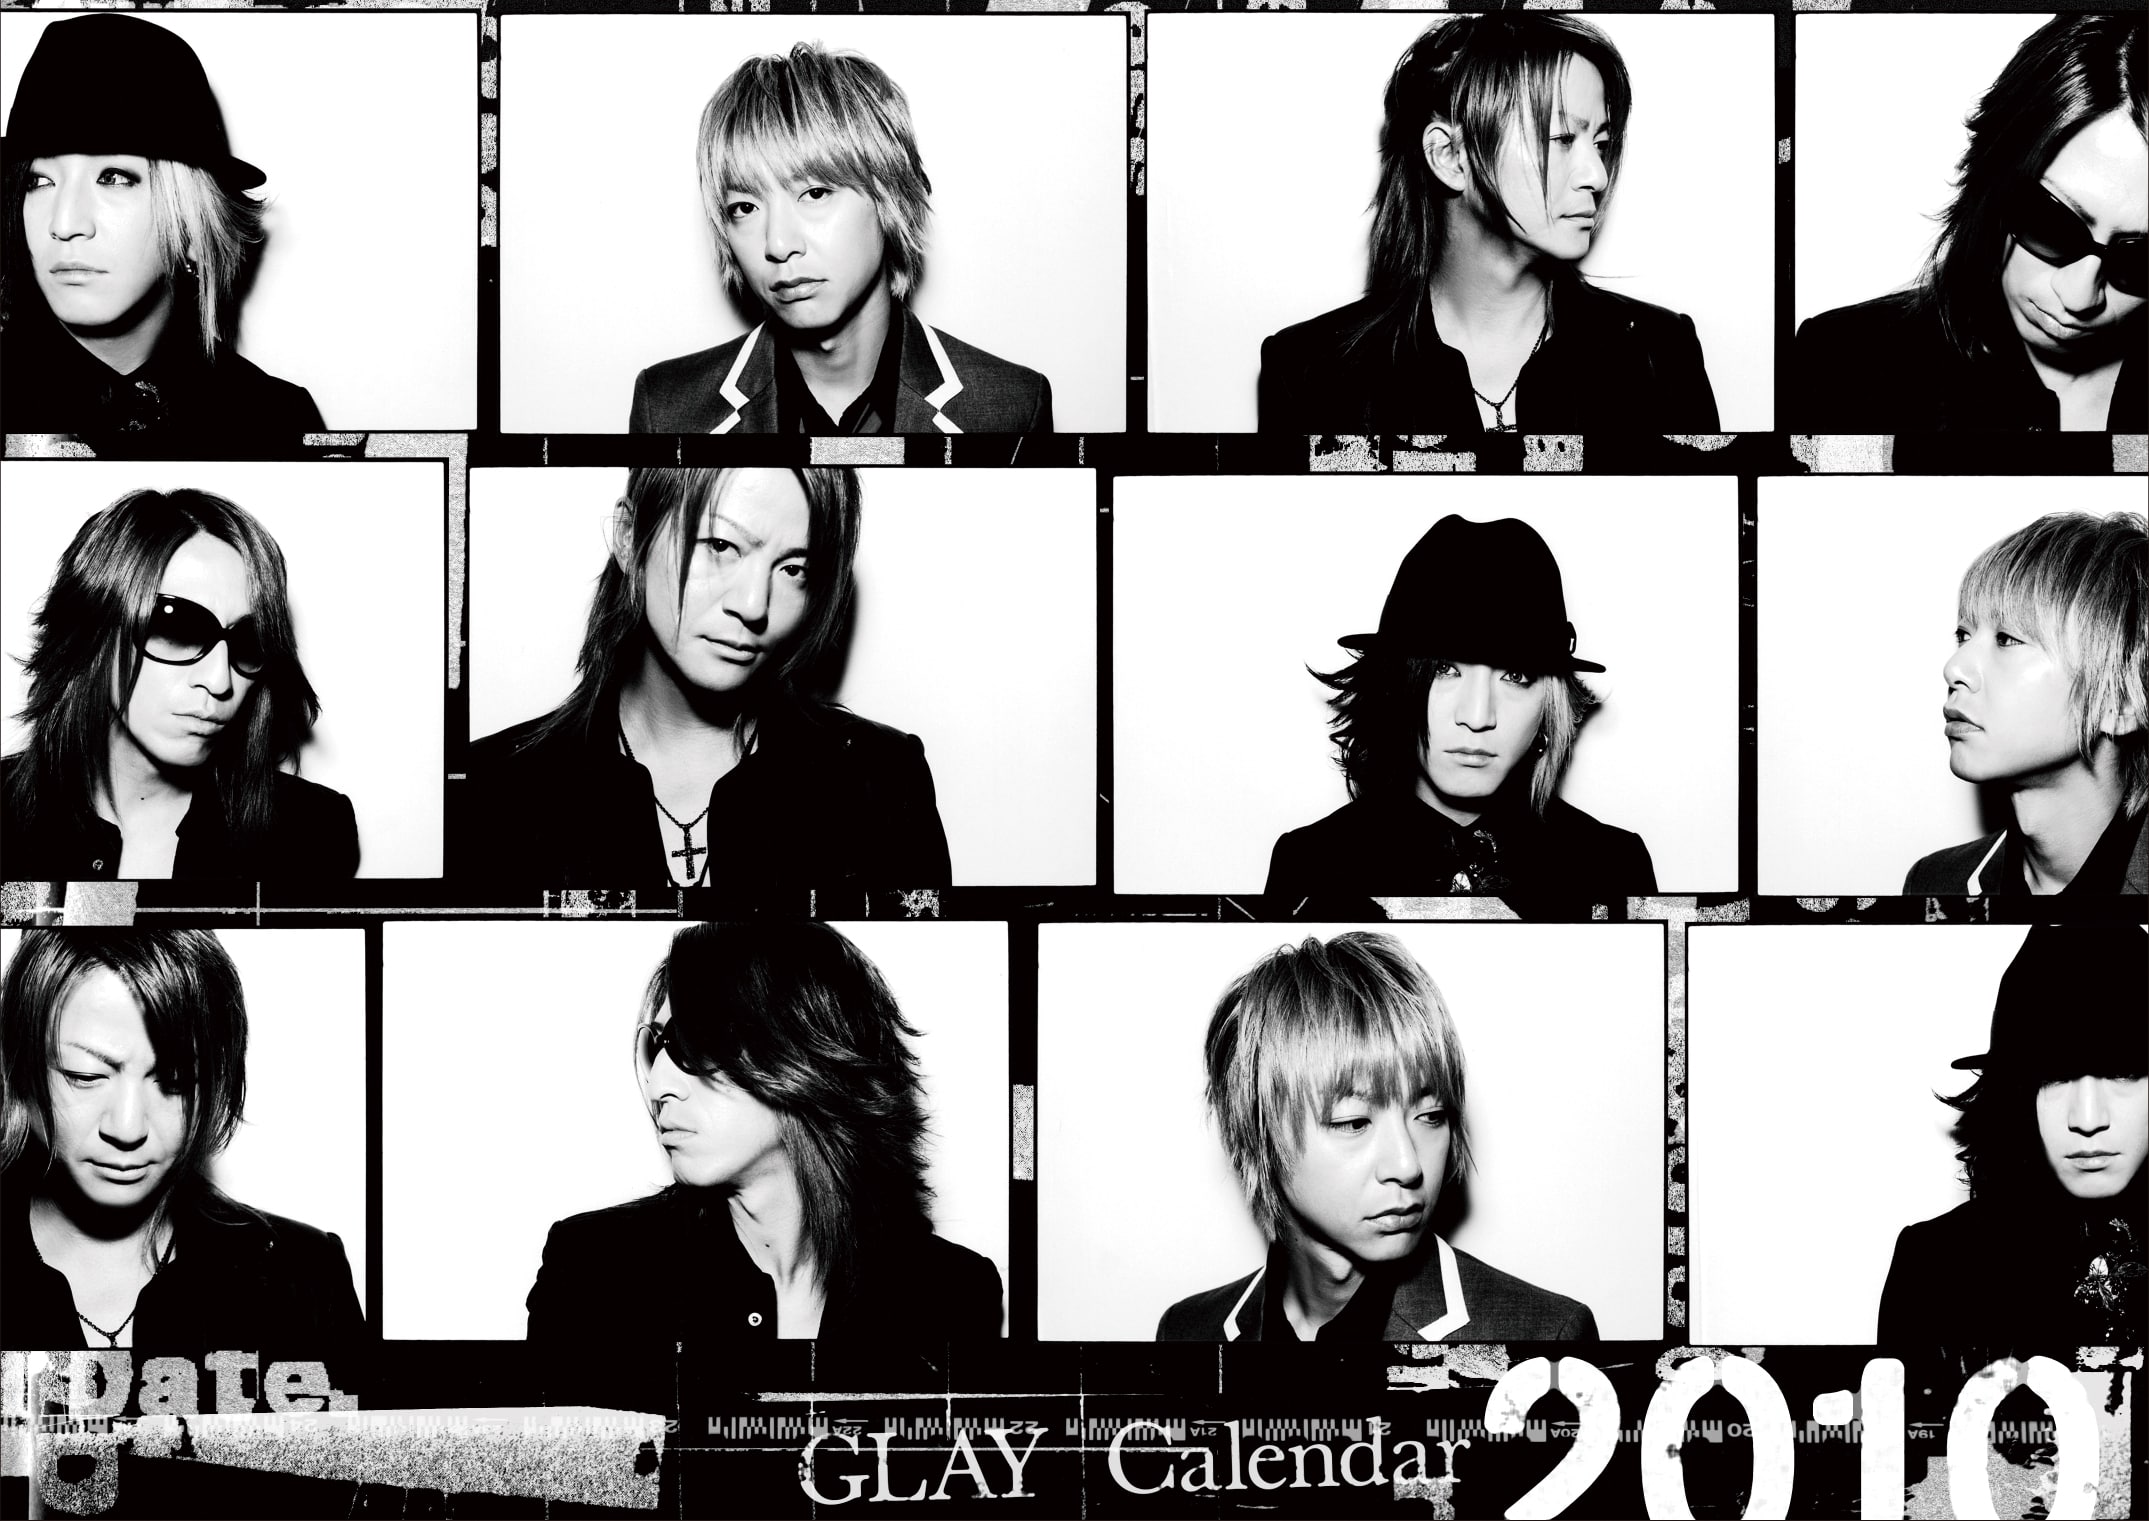 GLAY CALENDAR 2010